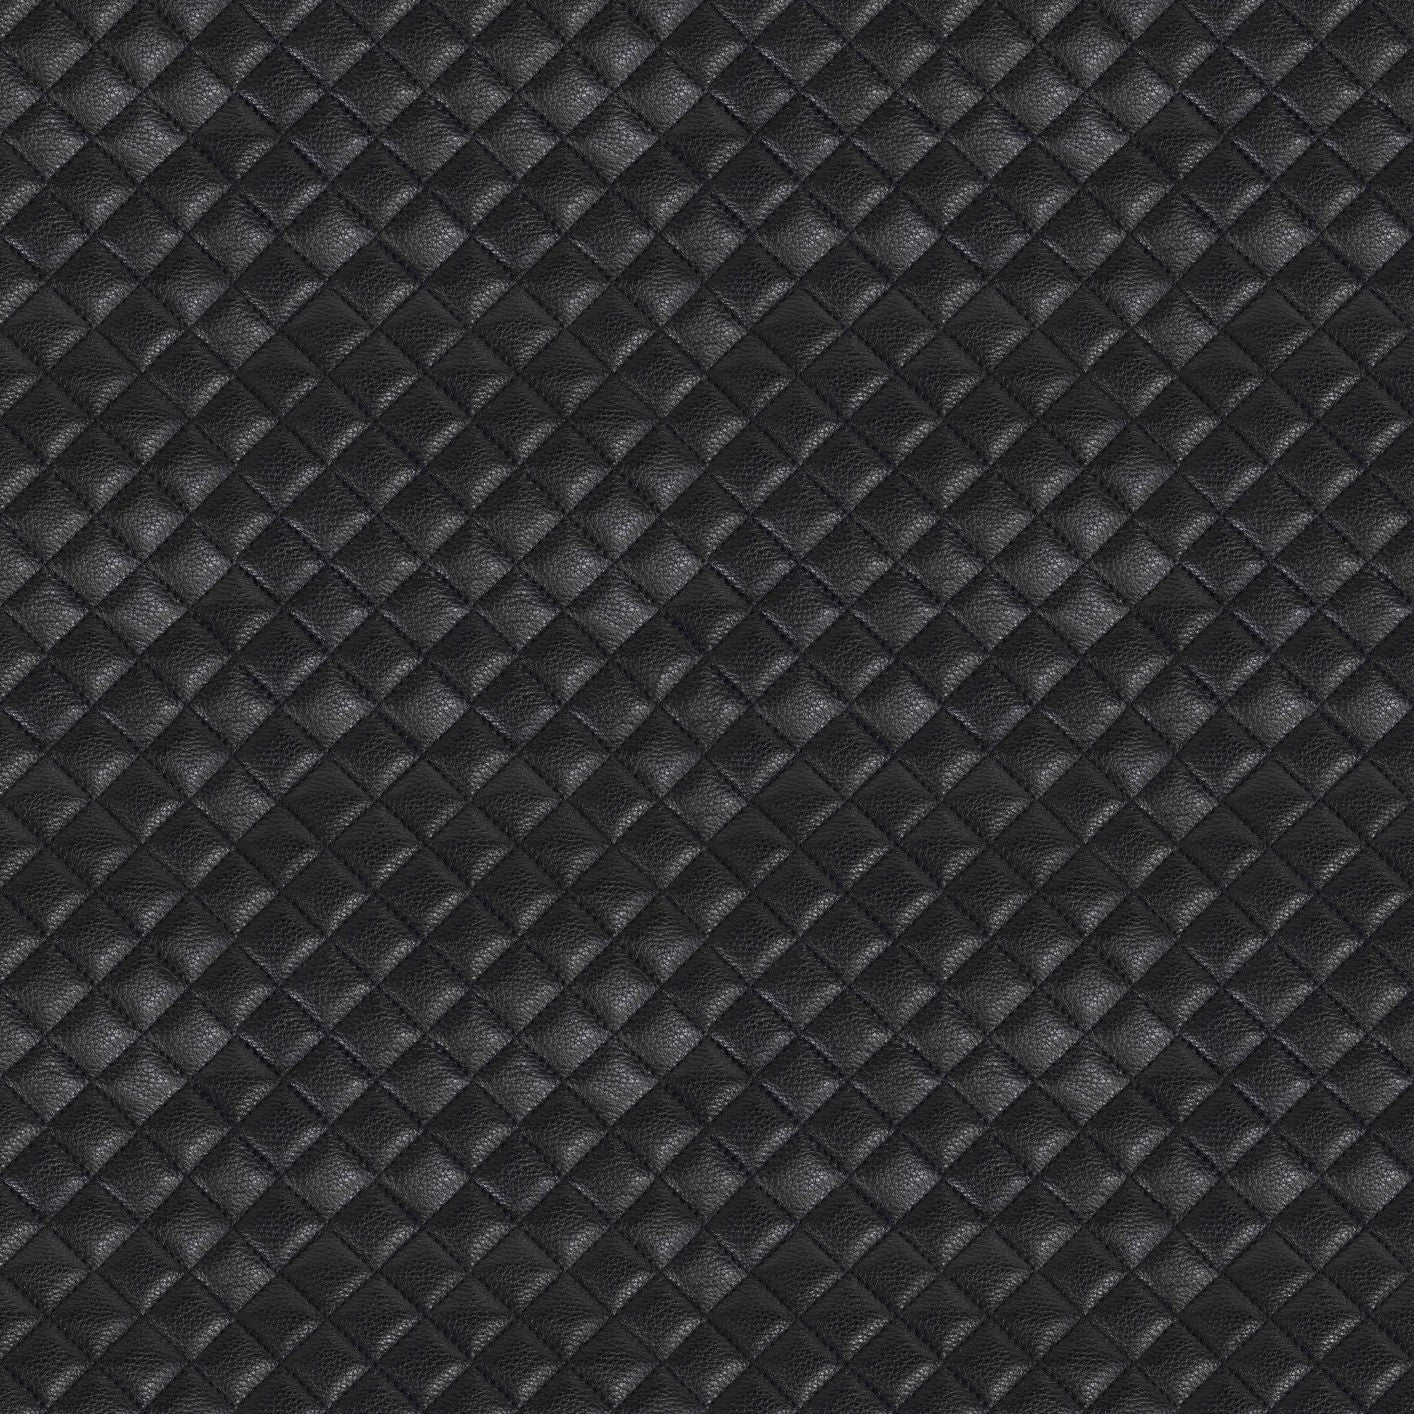 Black Leather - Adhesive Vinyl